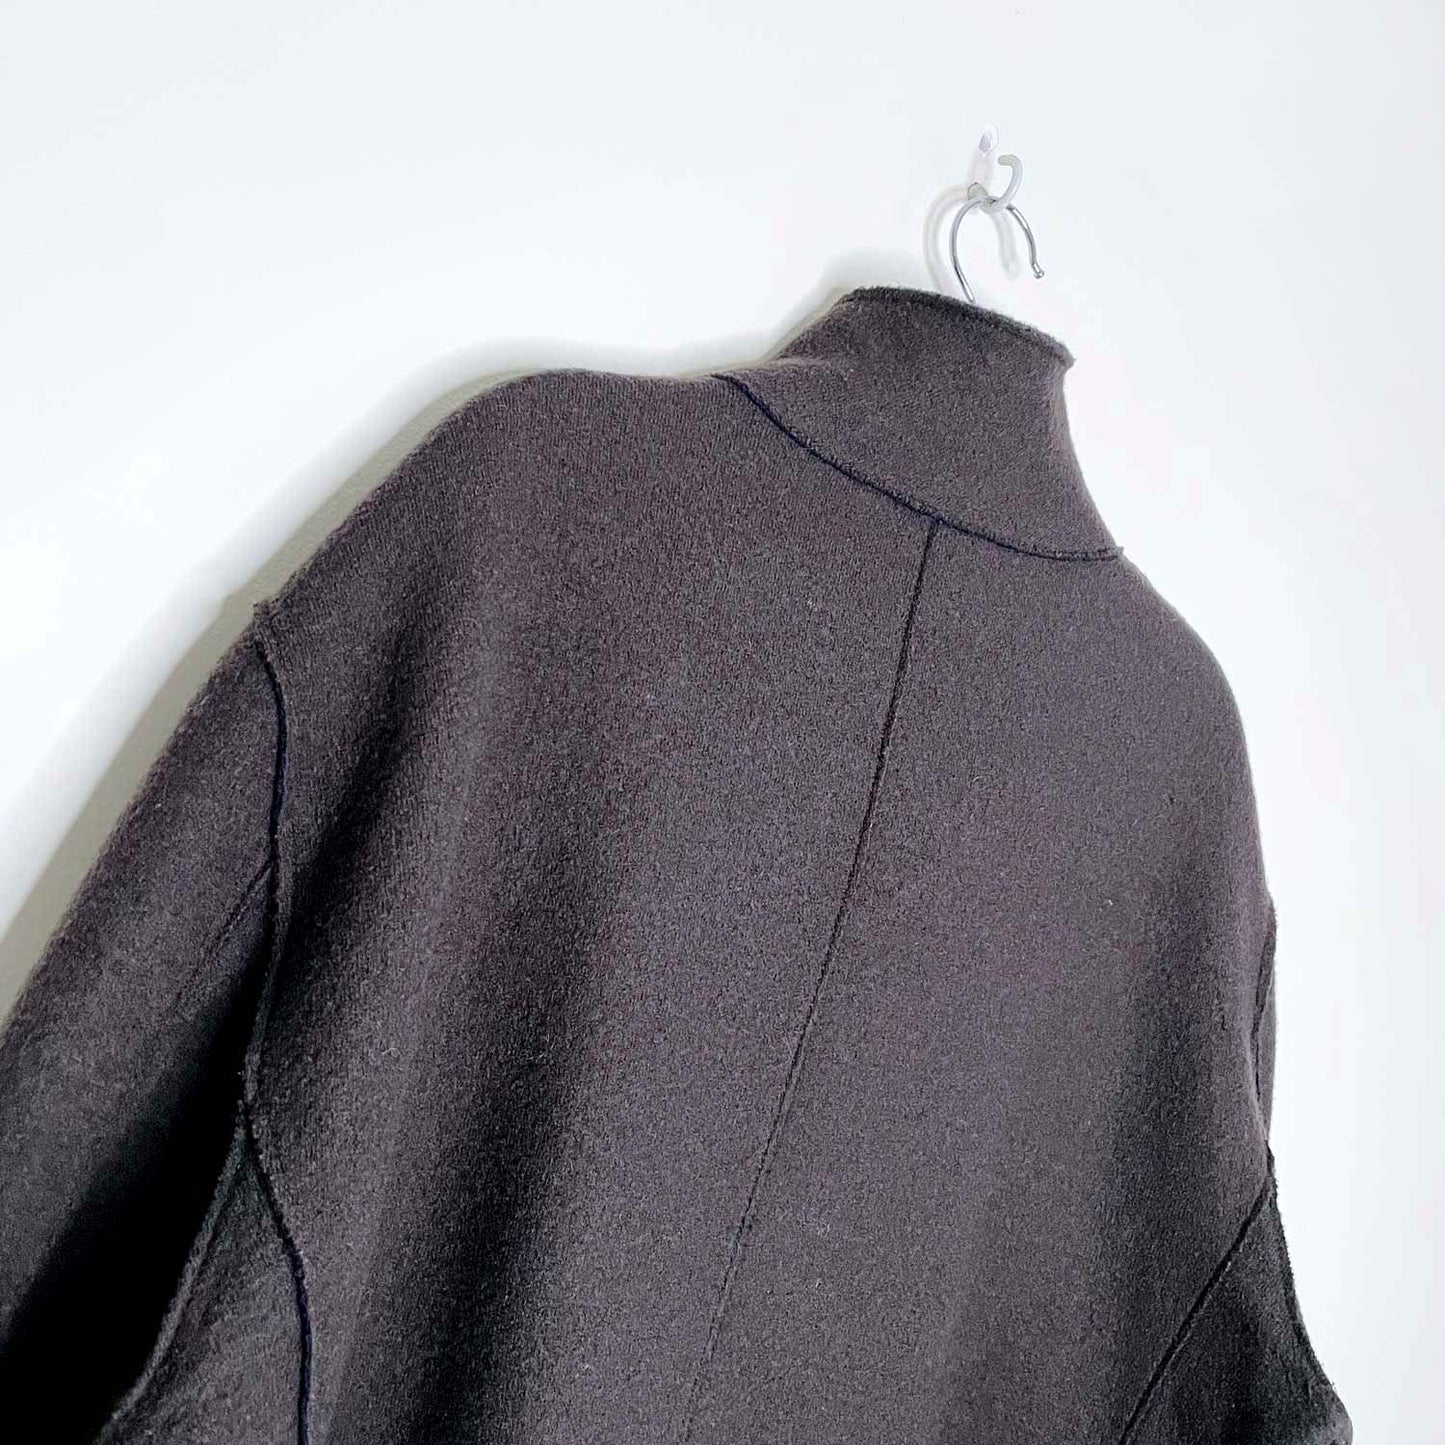 armani collezioni wool raw edgeshirt  jacket - size 48